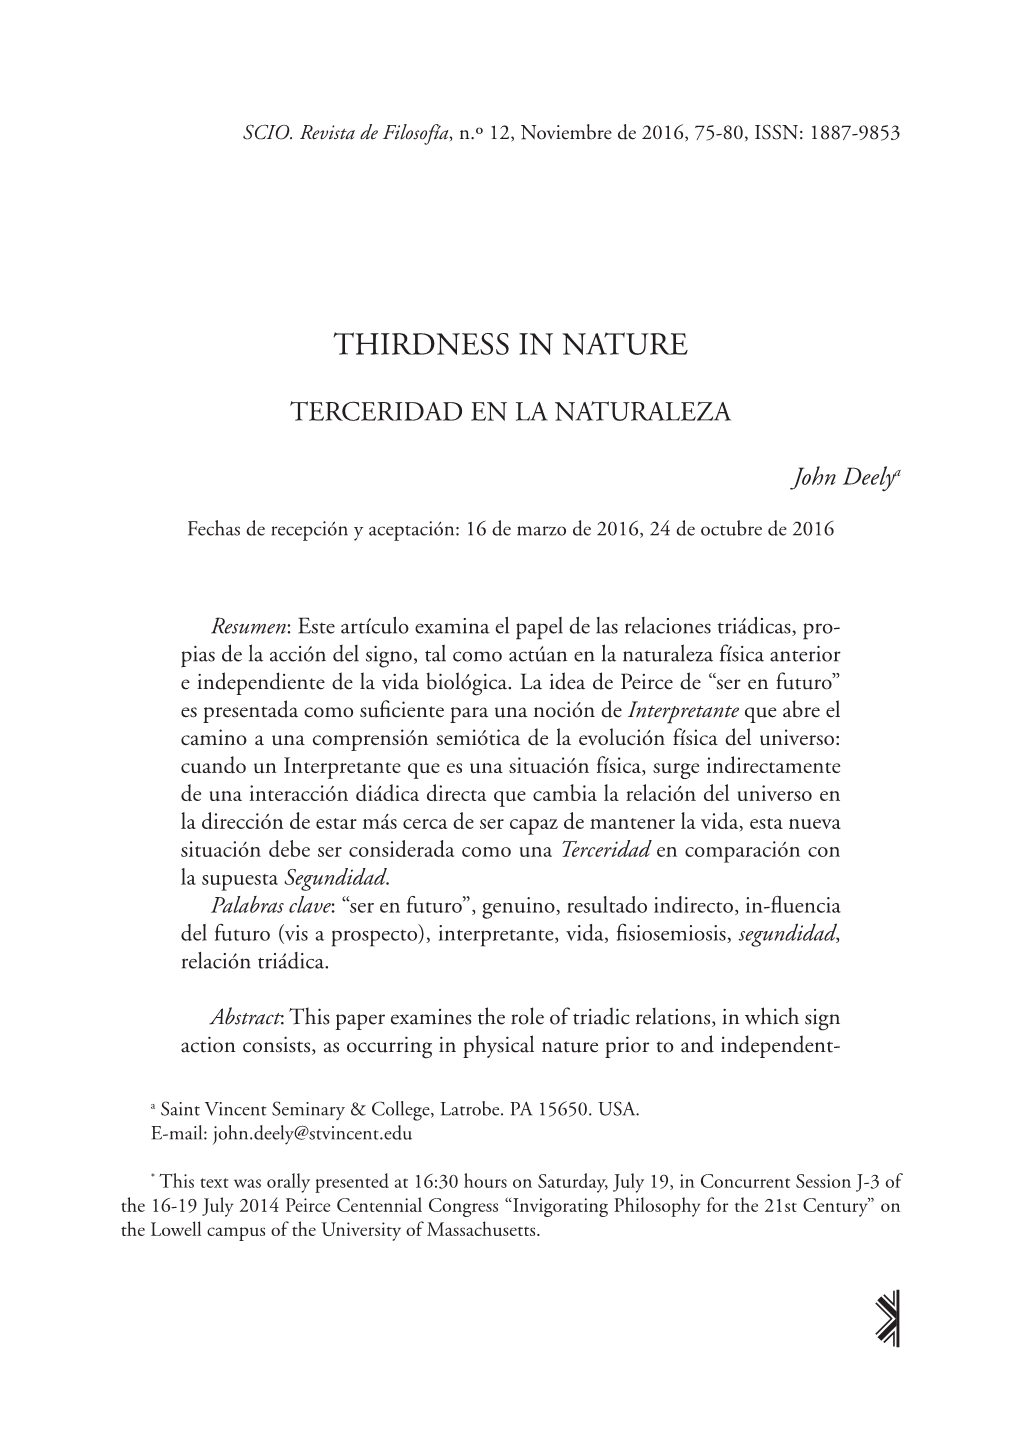 Thirdness in Nature